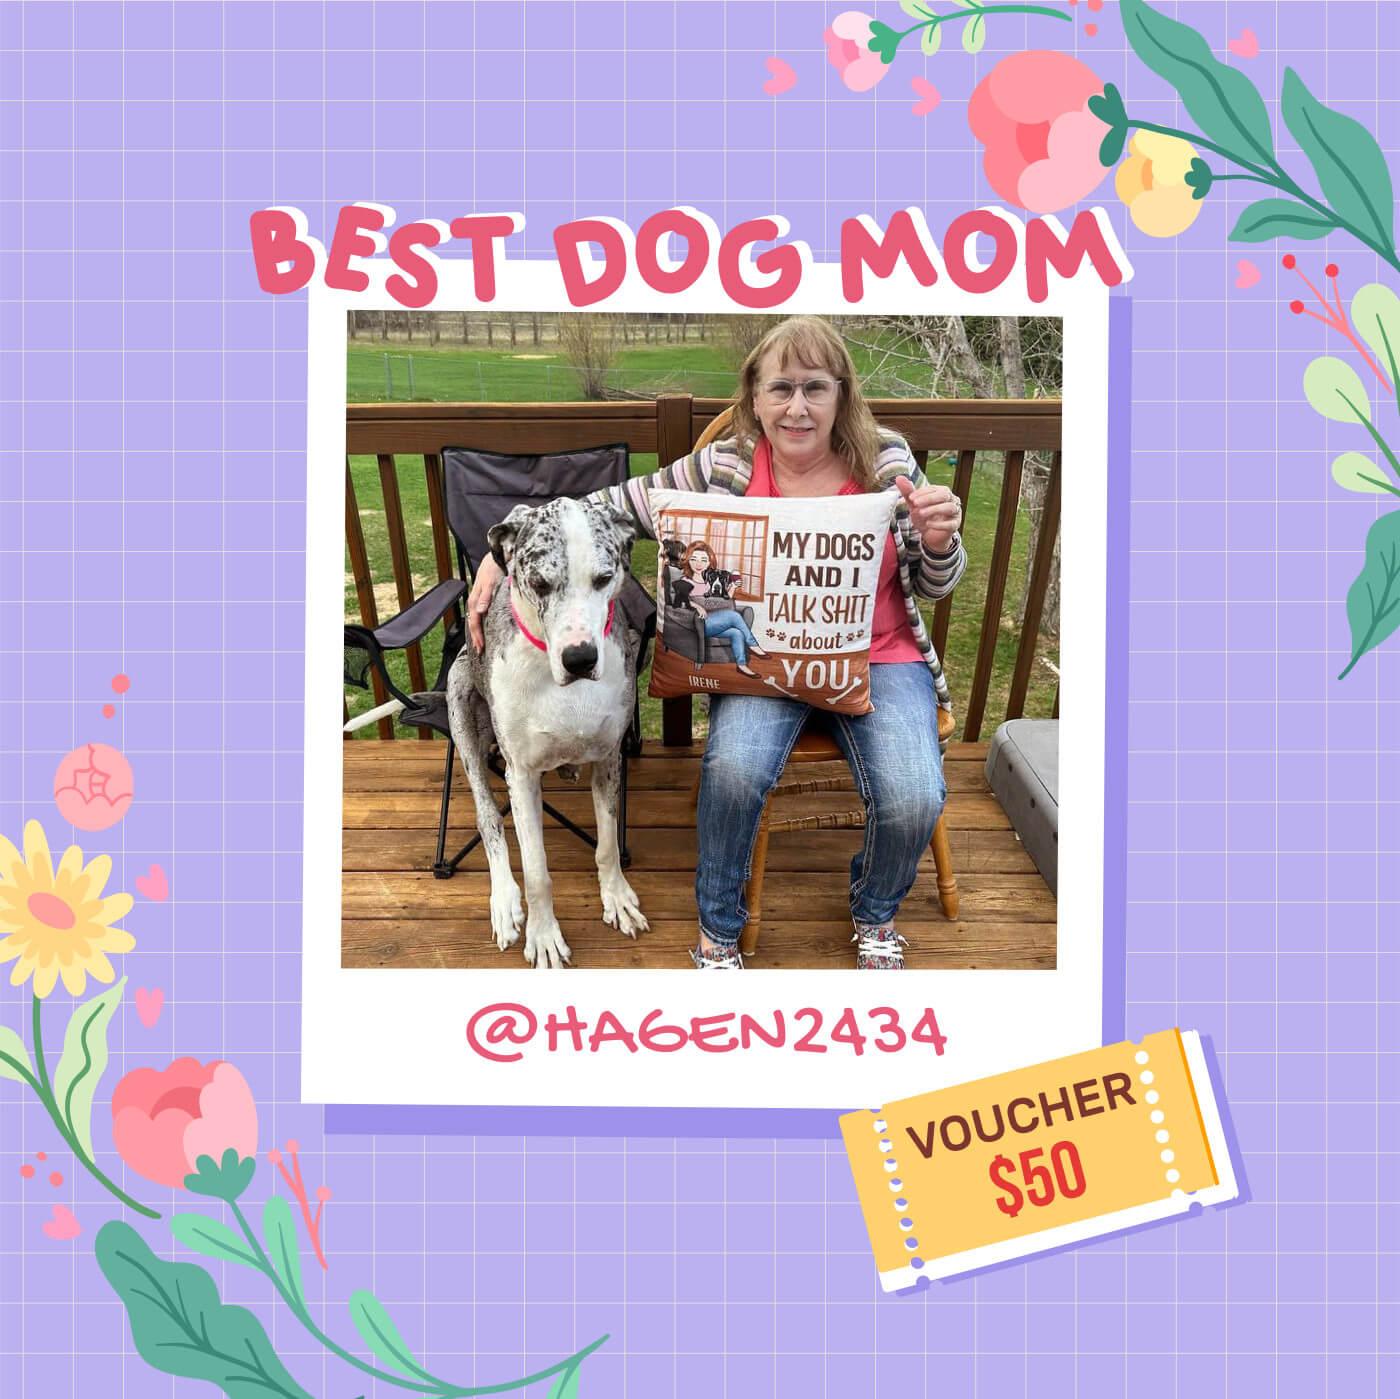 Best Dog Mom Contest